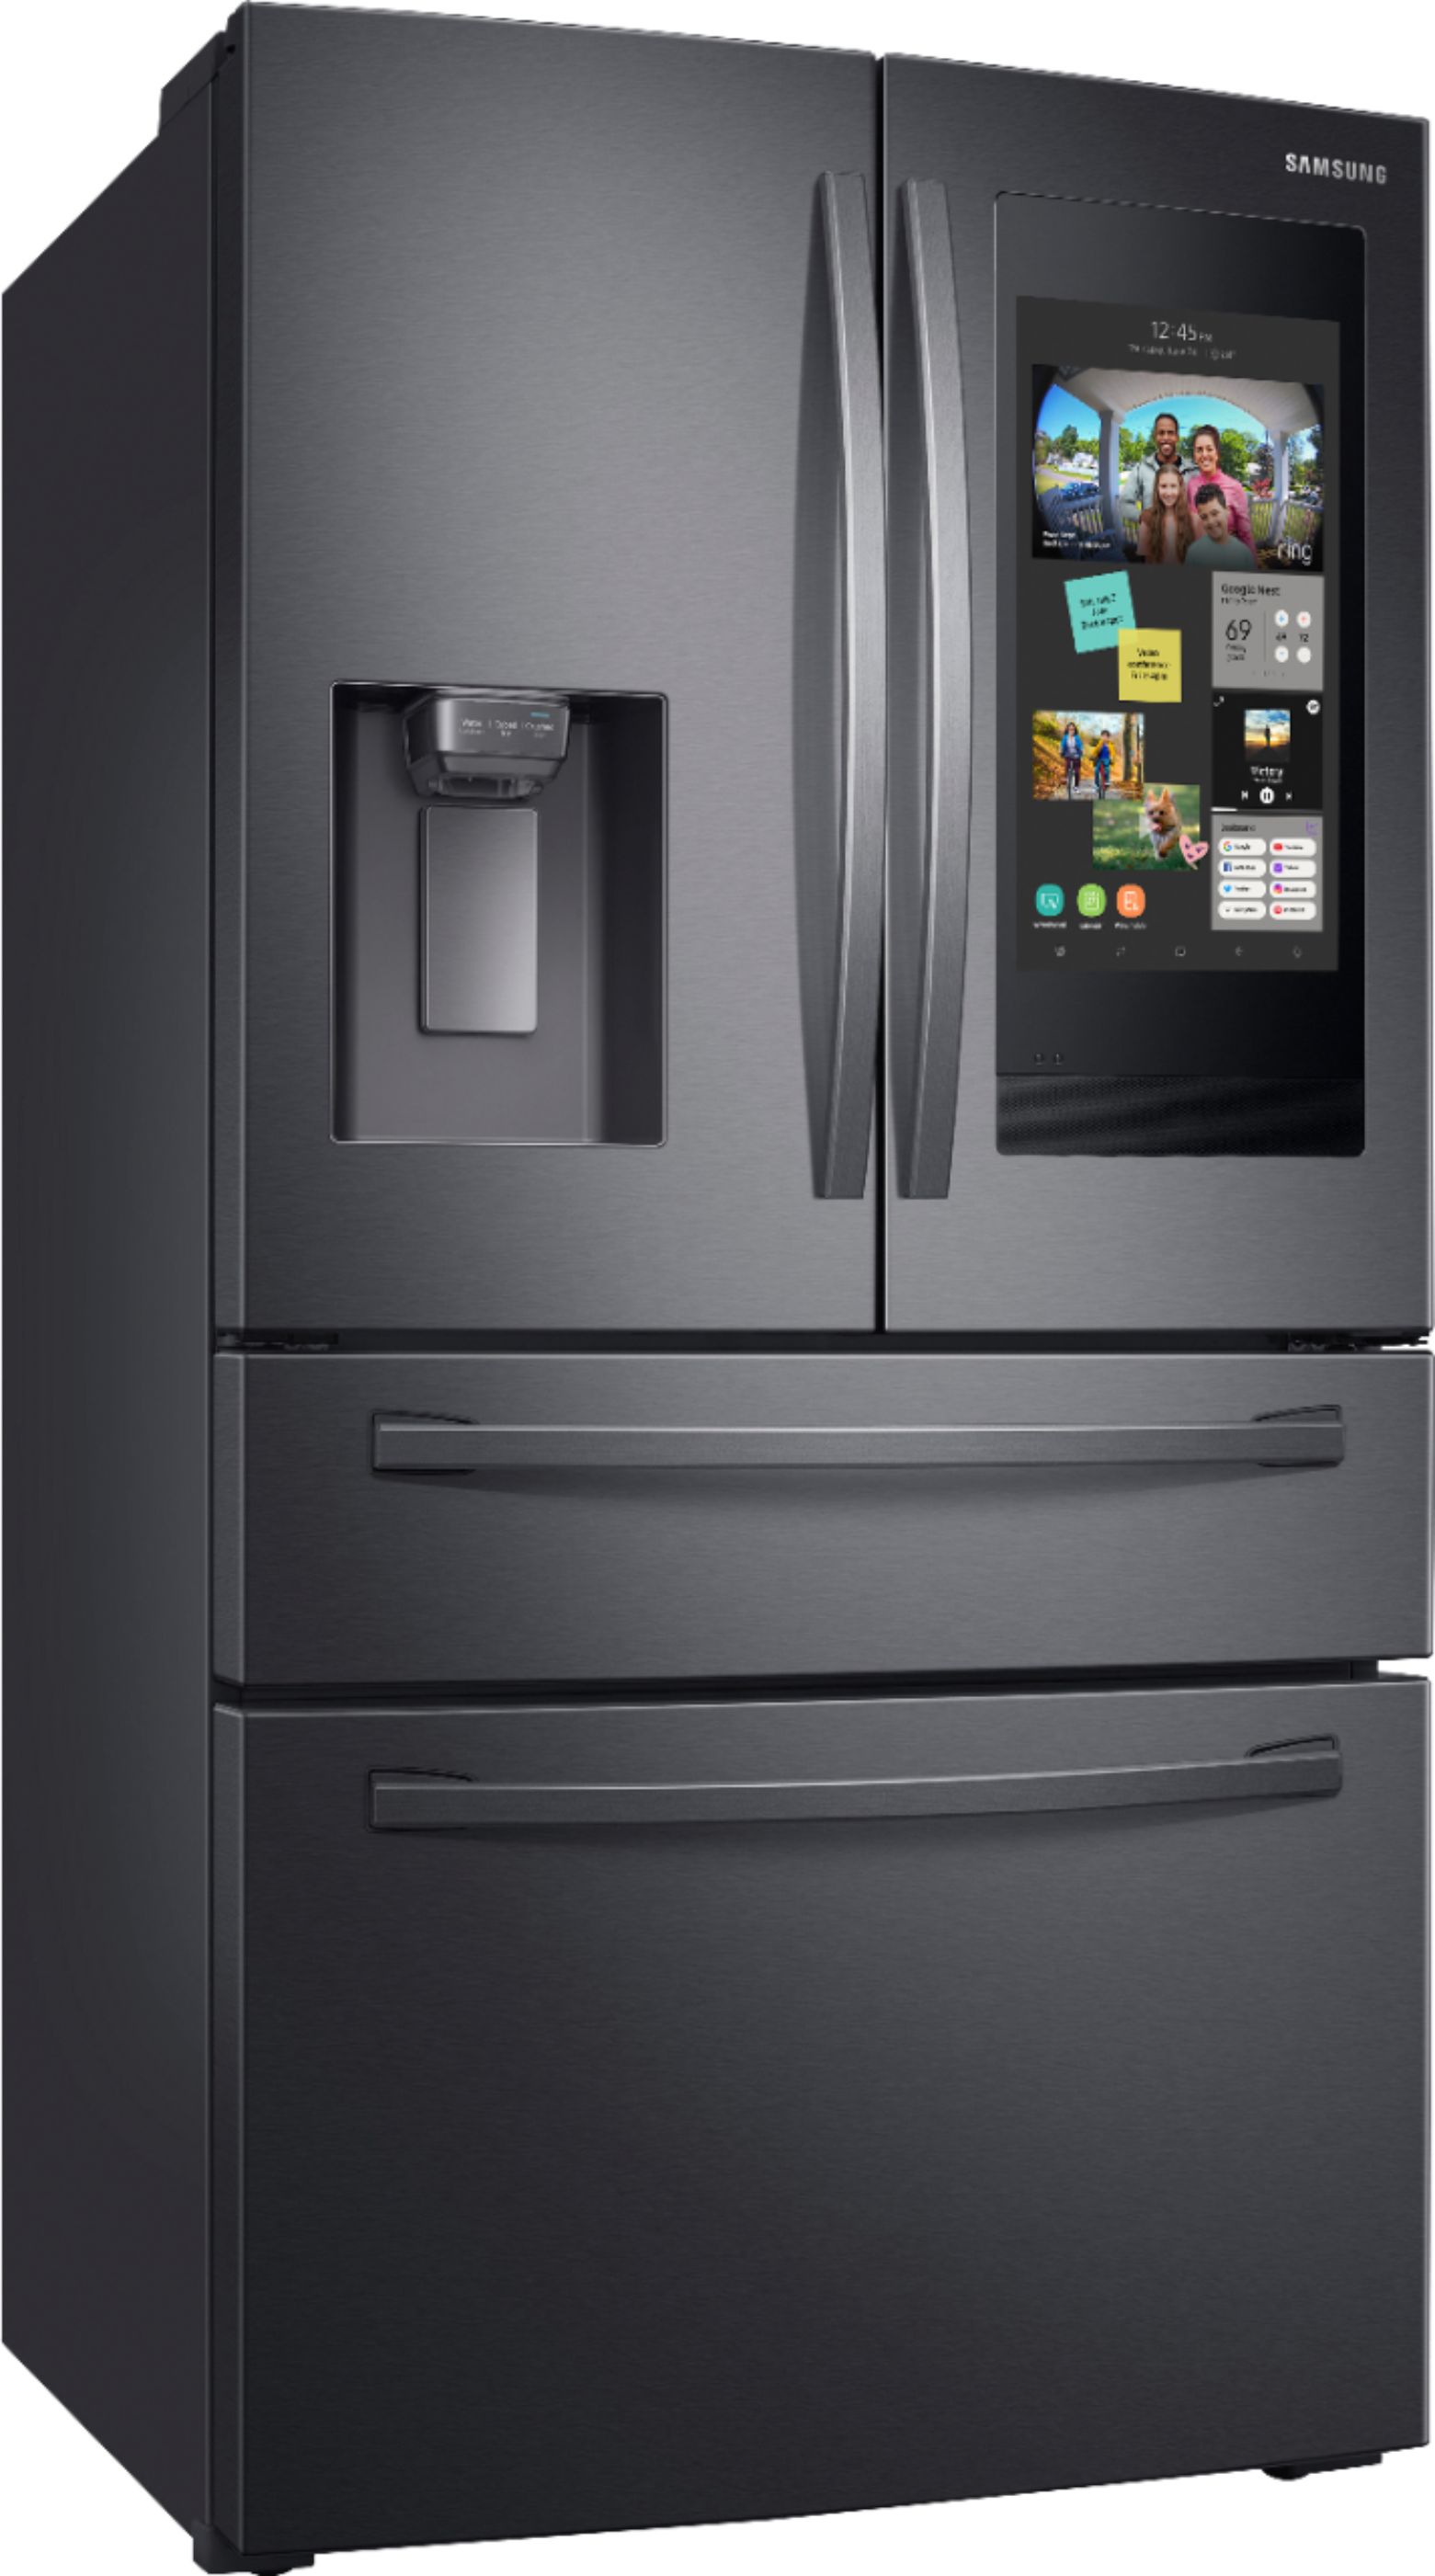 Angle View: Samsung - Family Hub 27.7 Cu. Ft. 4-Door French Door  Fingerprint Resistant Refrigerator - Black stainless steel